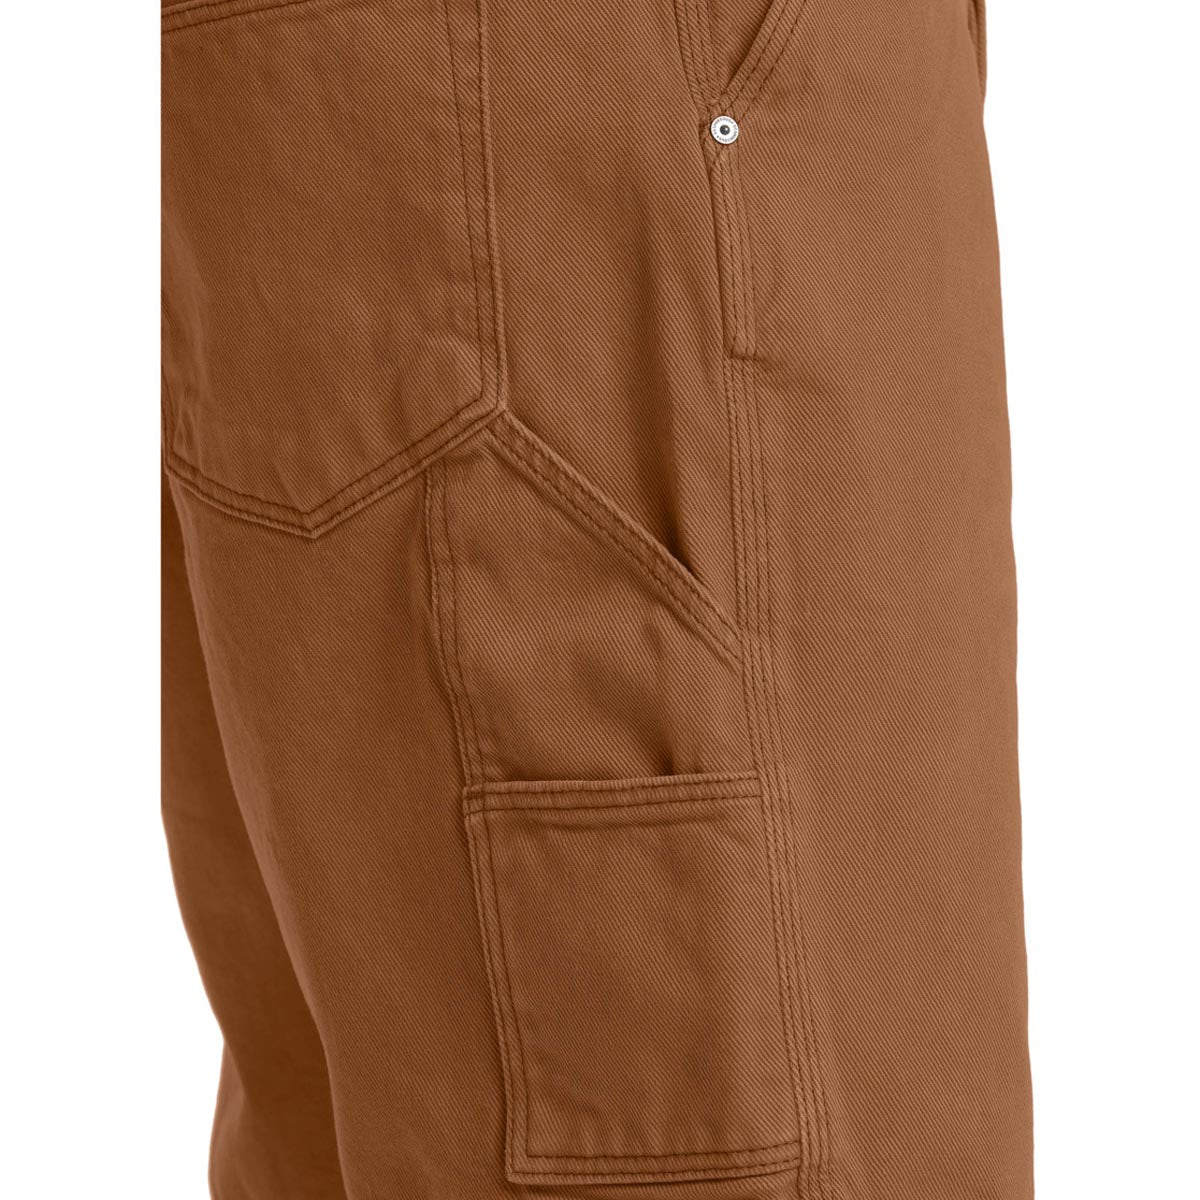 DC Carpenter Baggy Shorts - Brown Overdye image 5